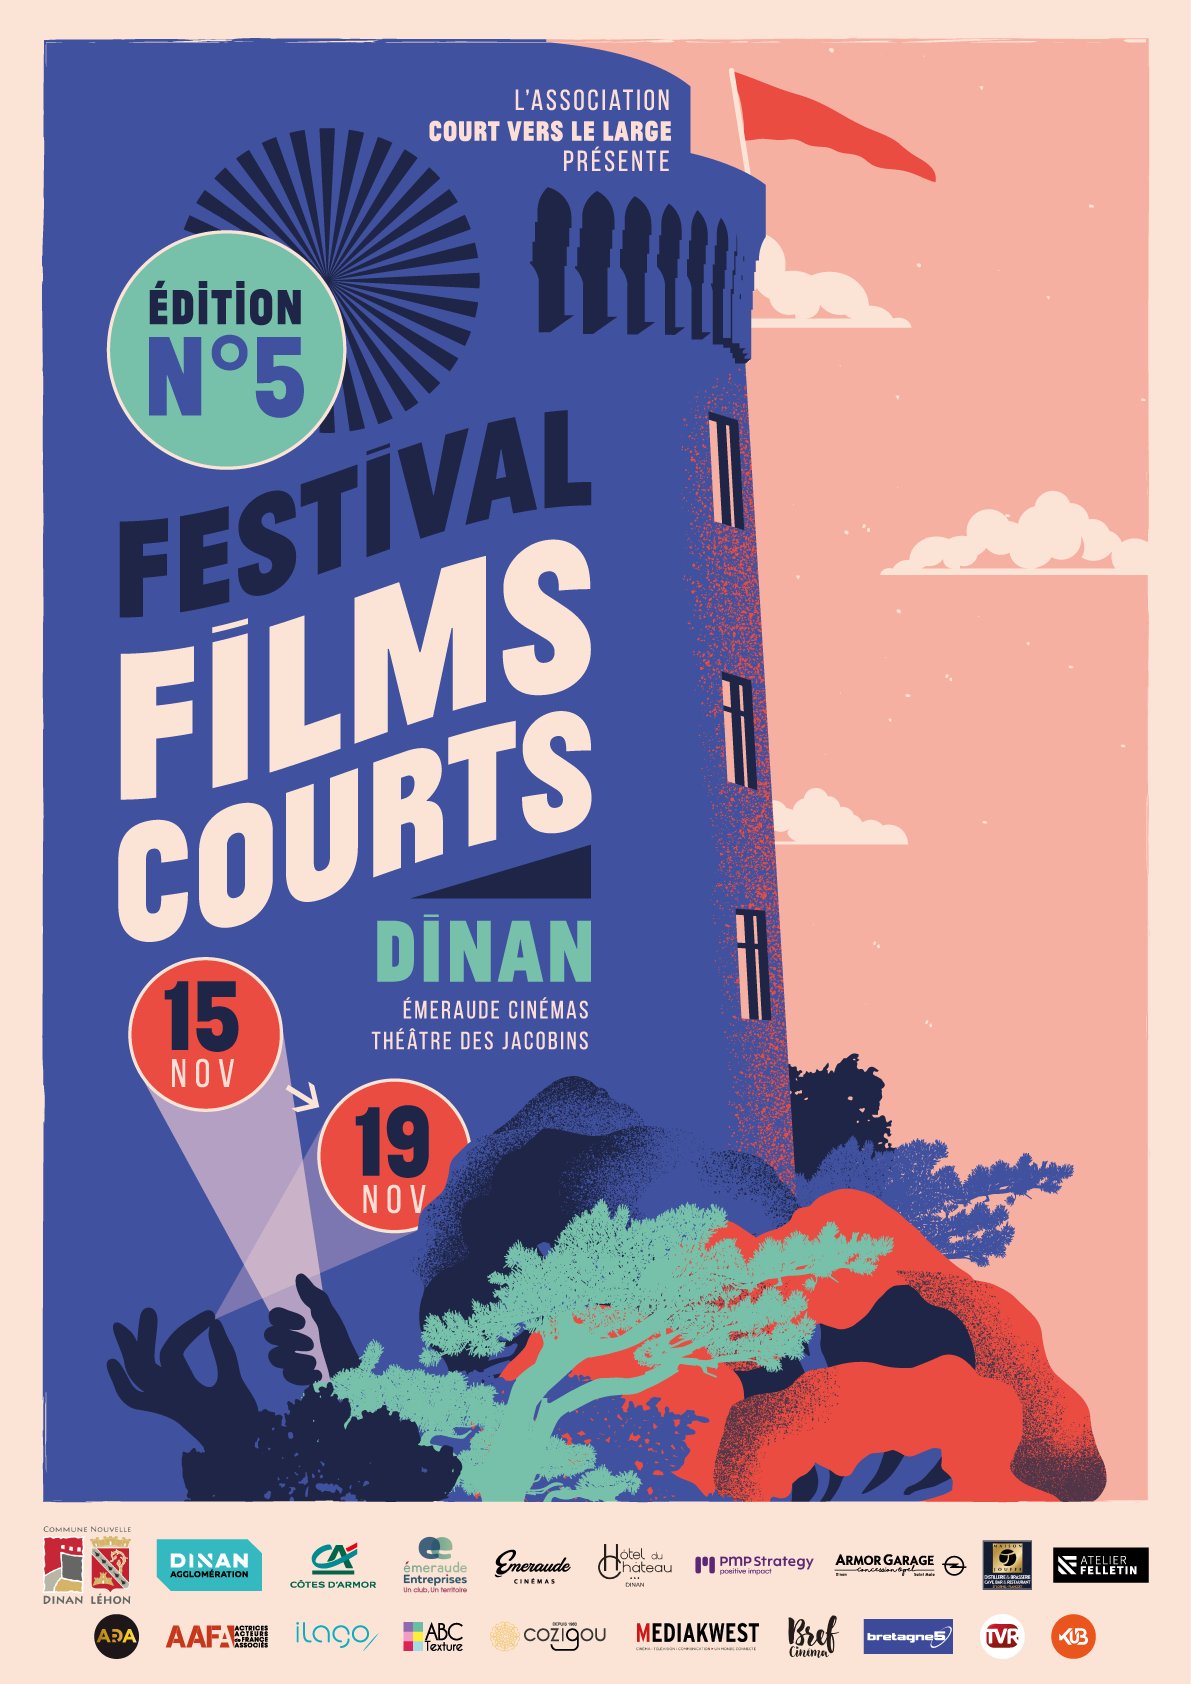 Festival films courts dinan